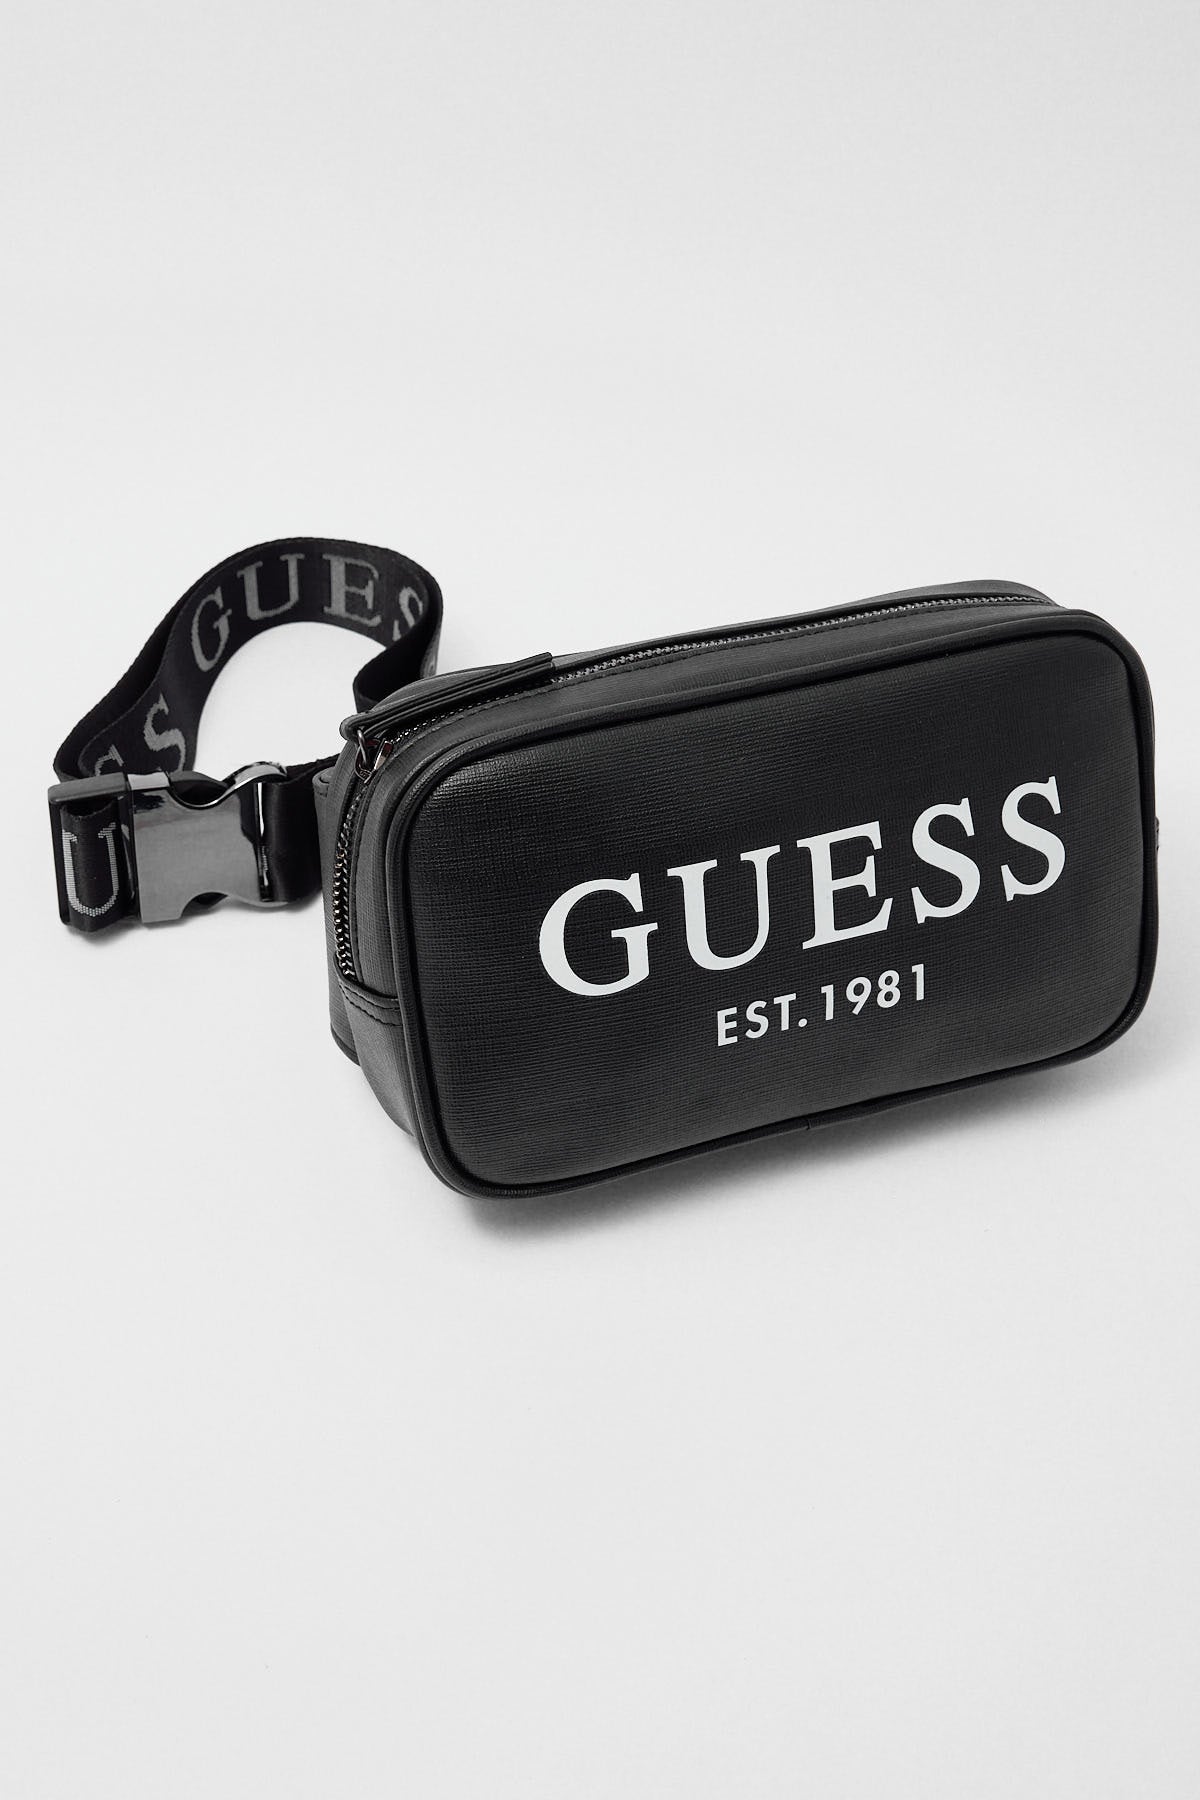 Guess Originals Outfitter Bum Bag Black – Universal Store